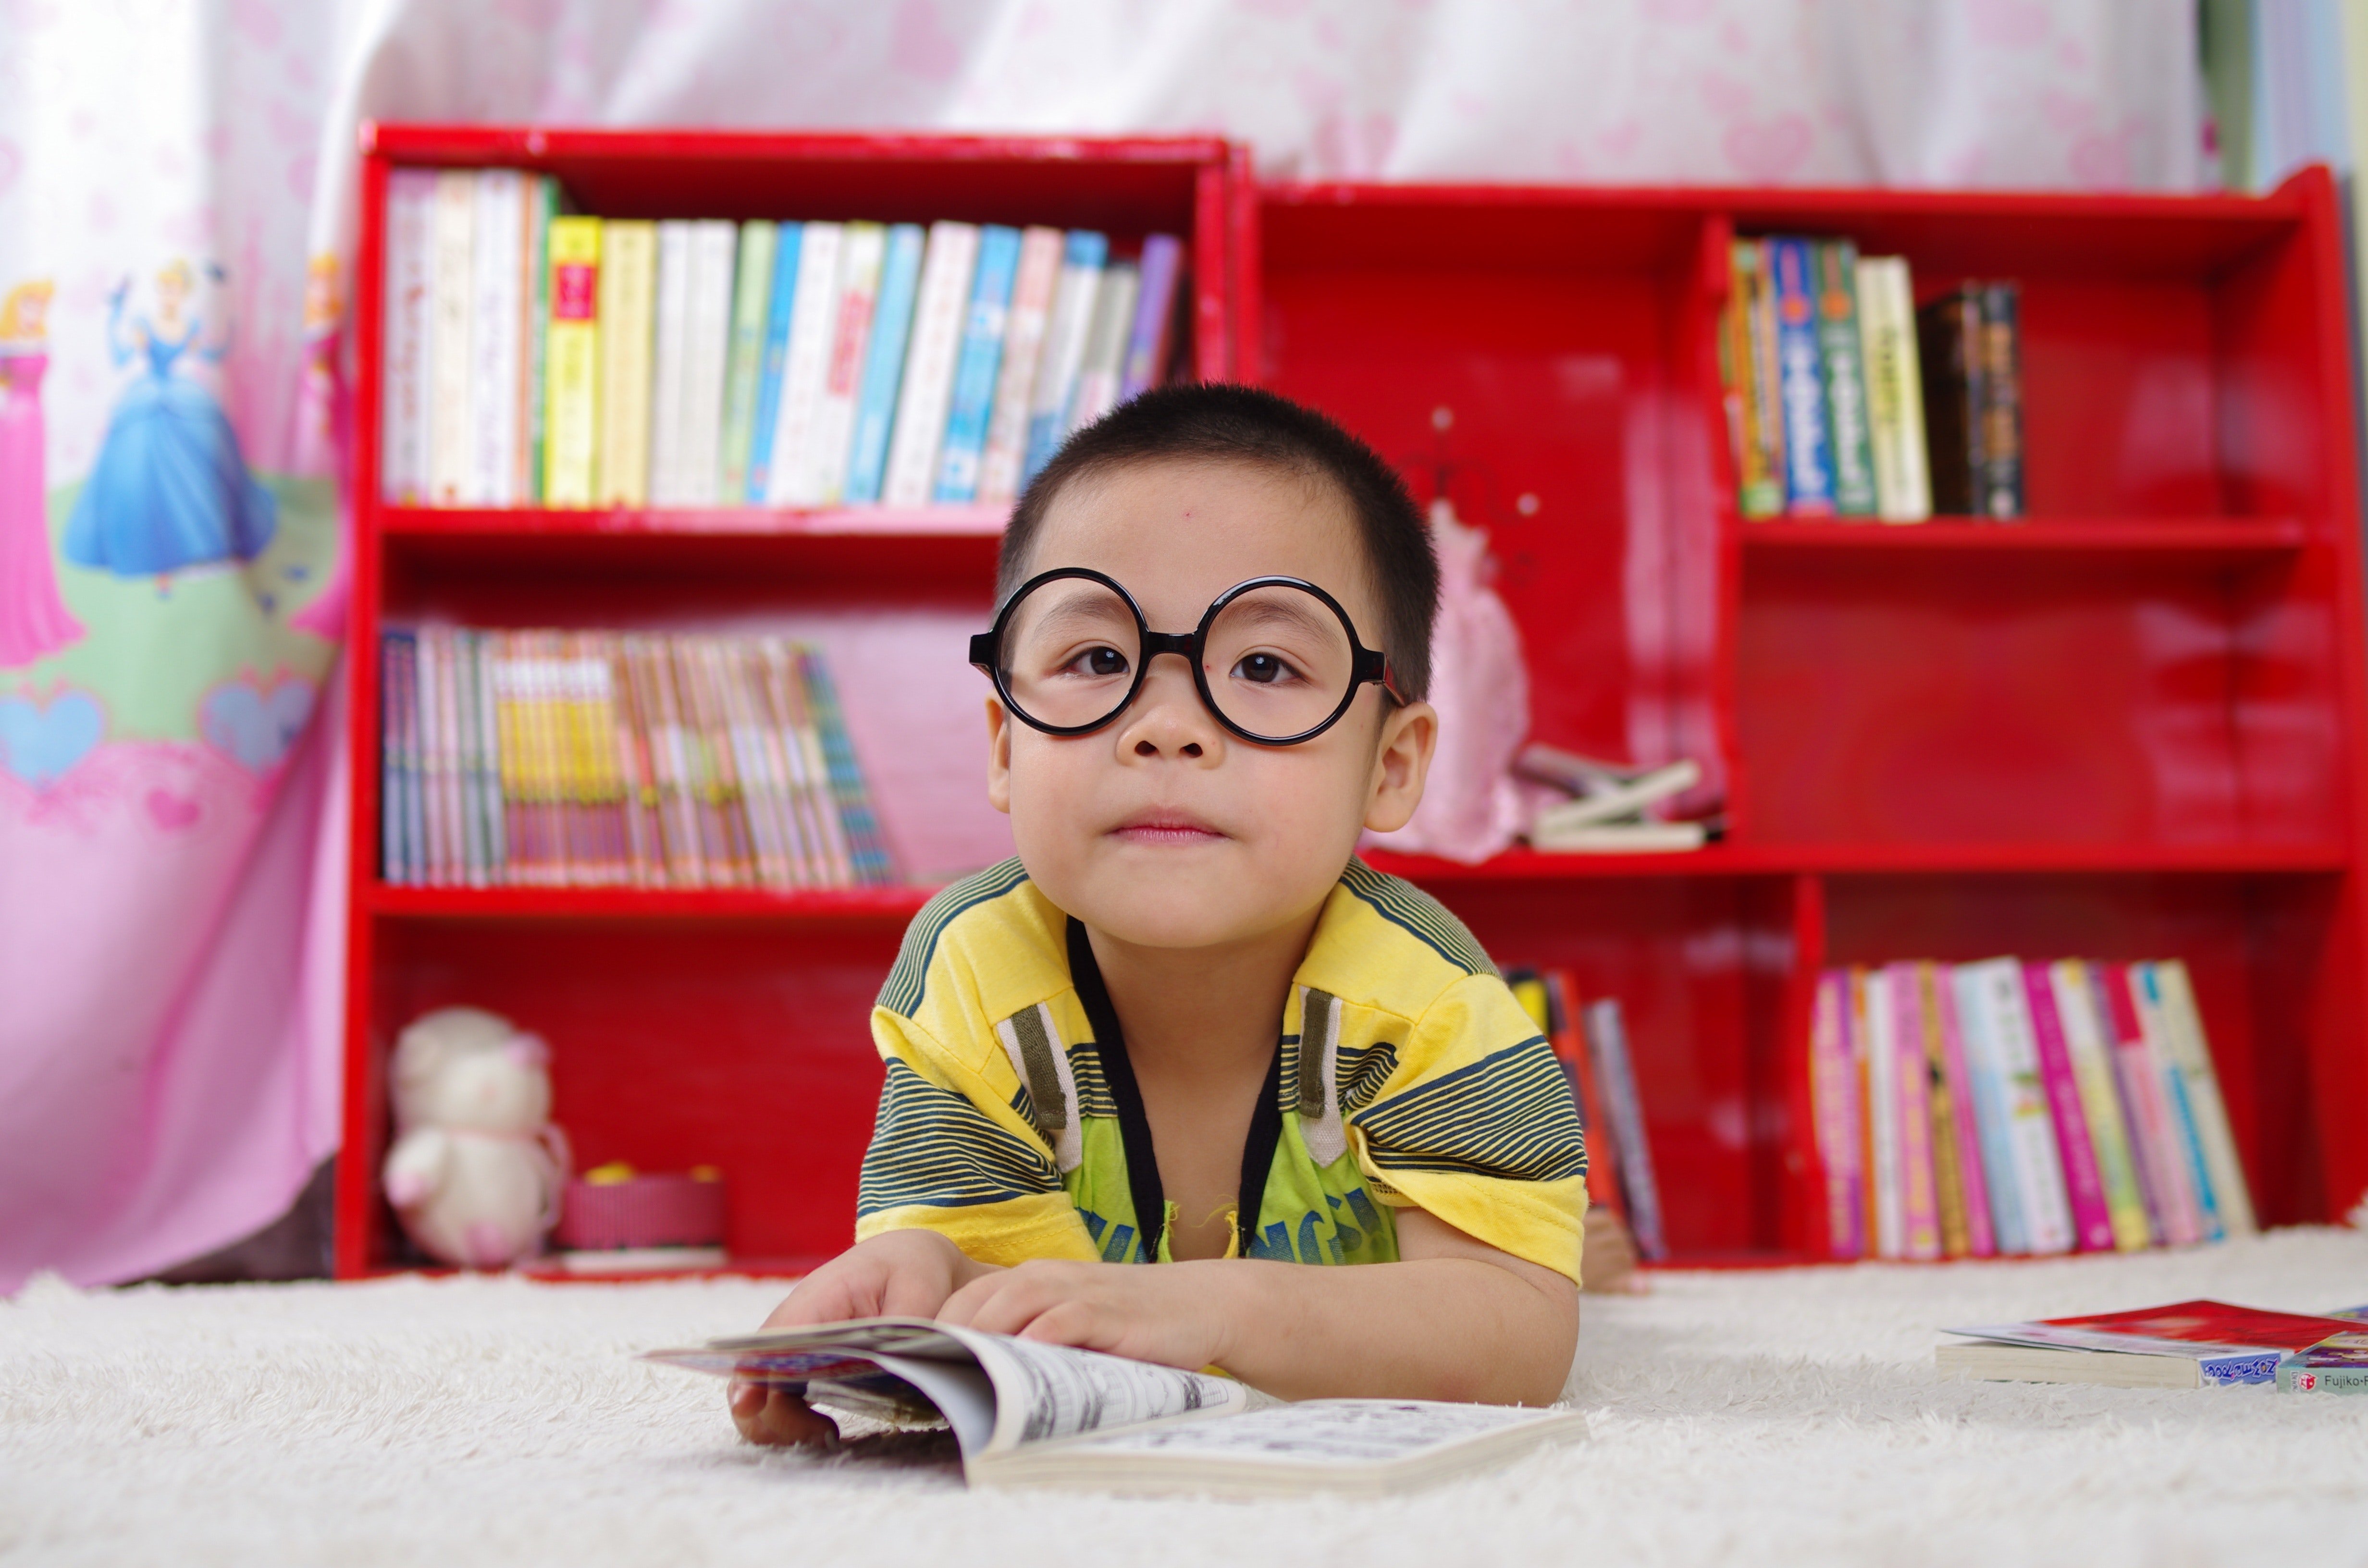 A boy wearing glasses. | Photo: Pexels/Pixabay